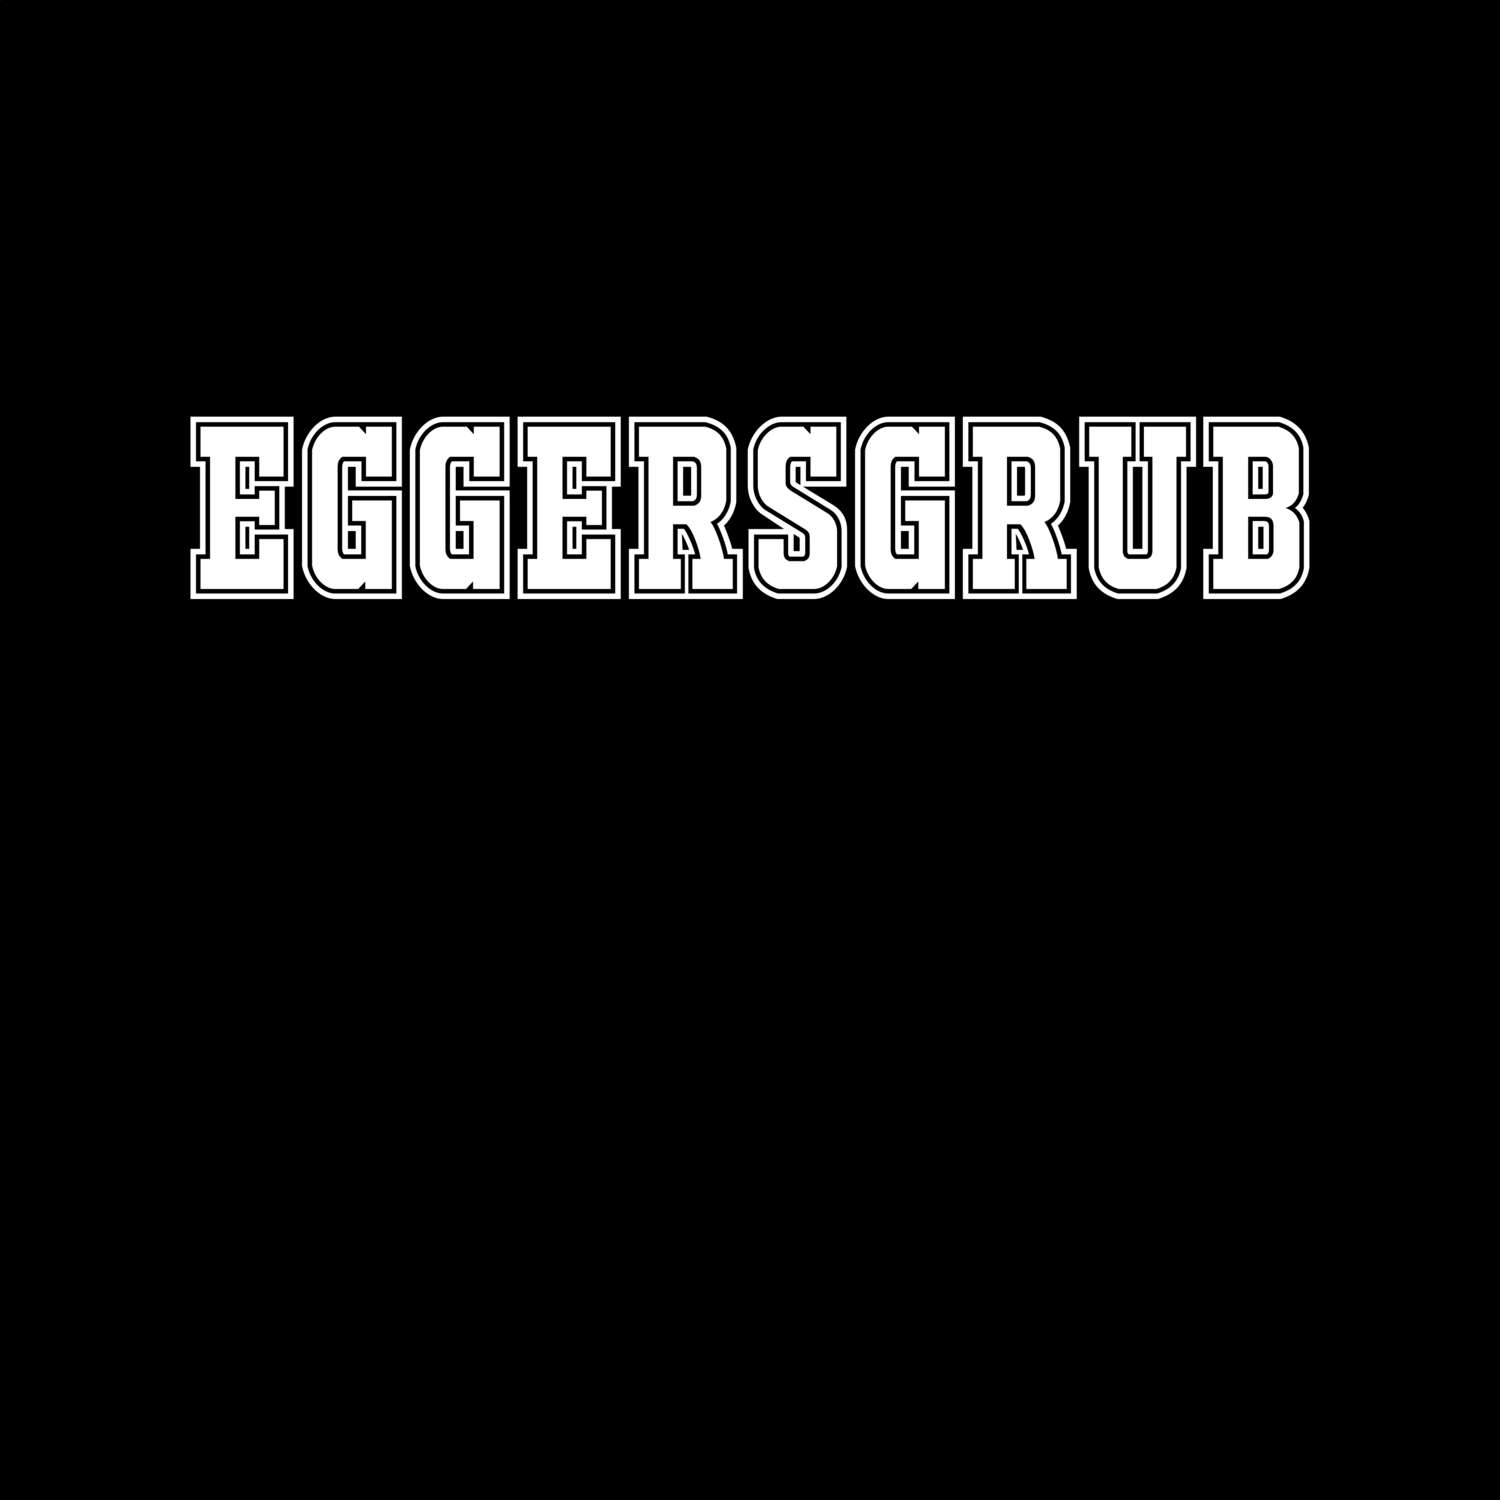 Eggersgrub T-Shirt »Classic«